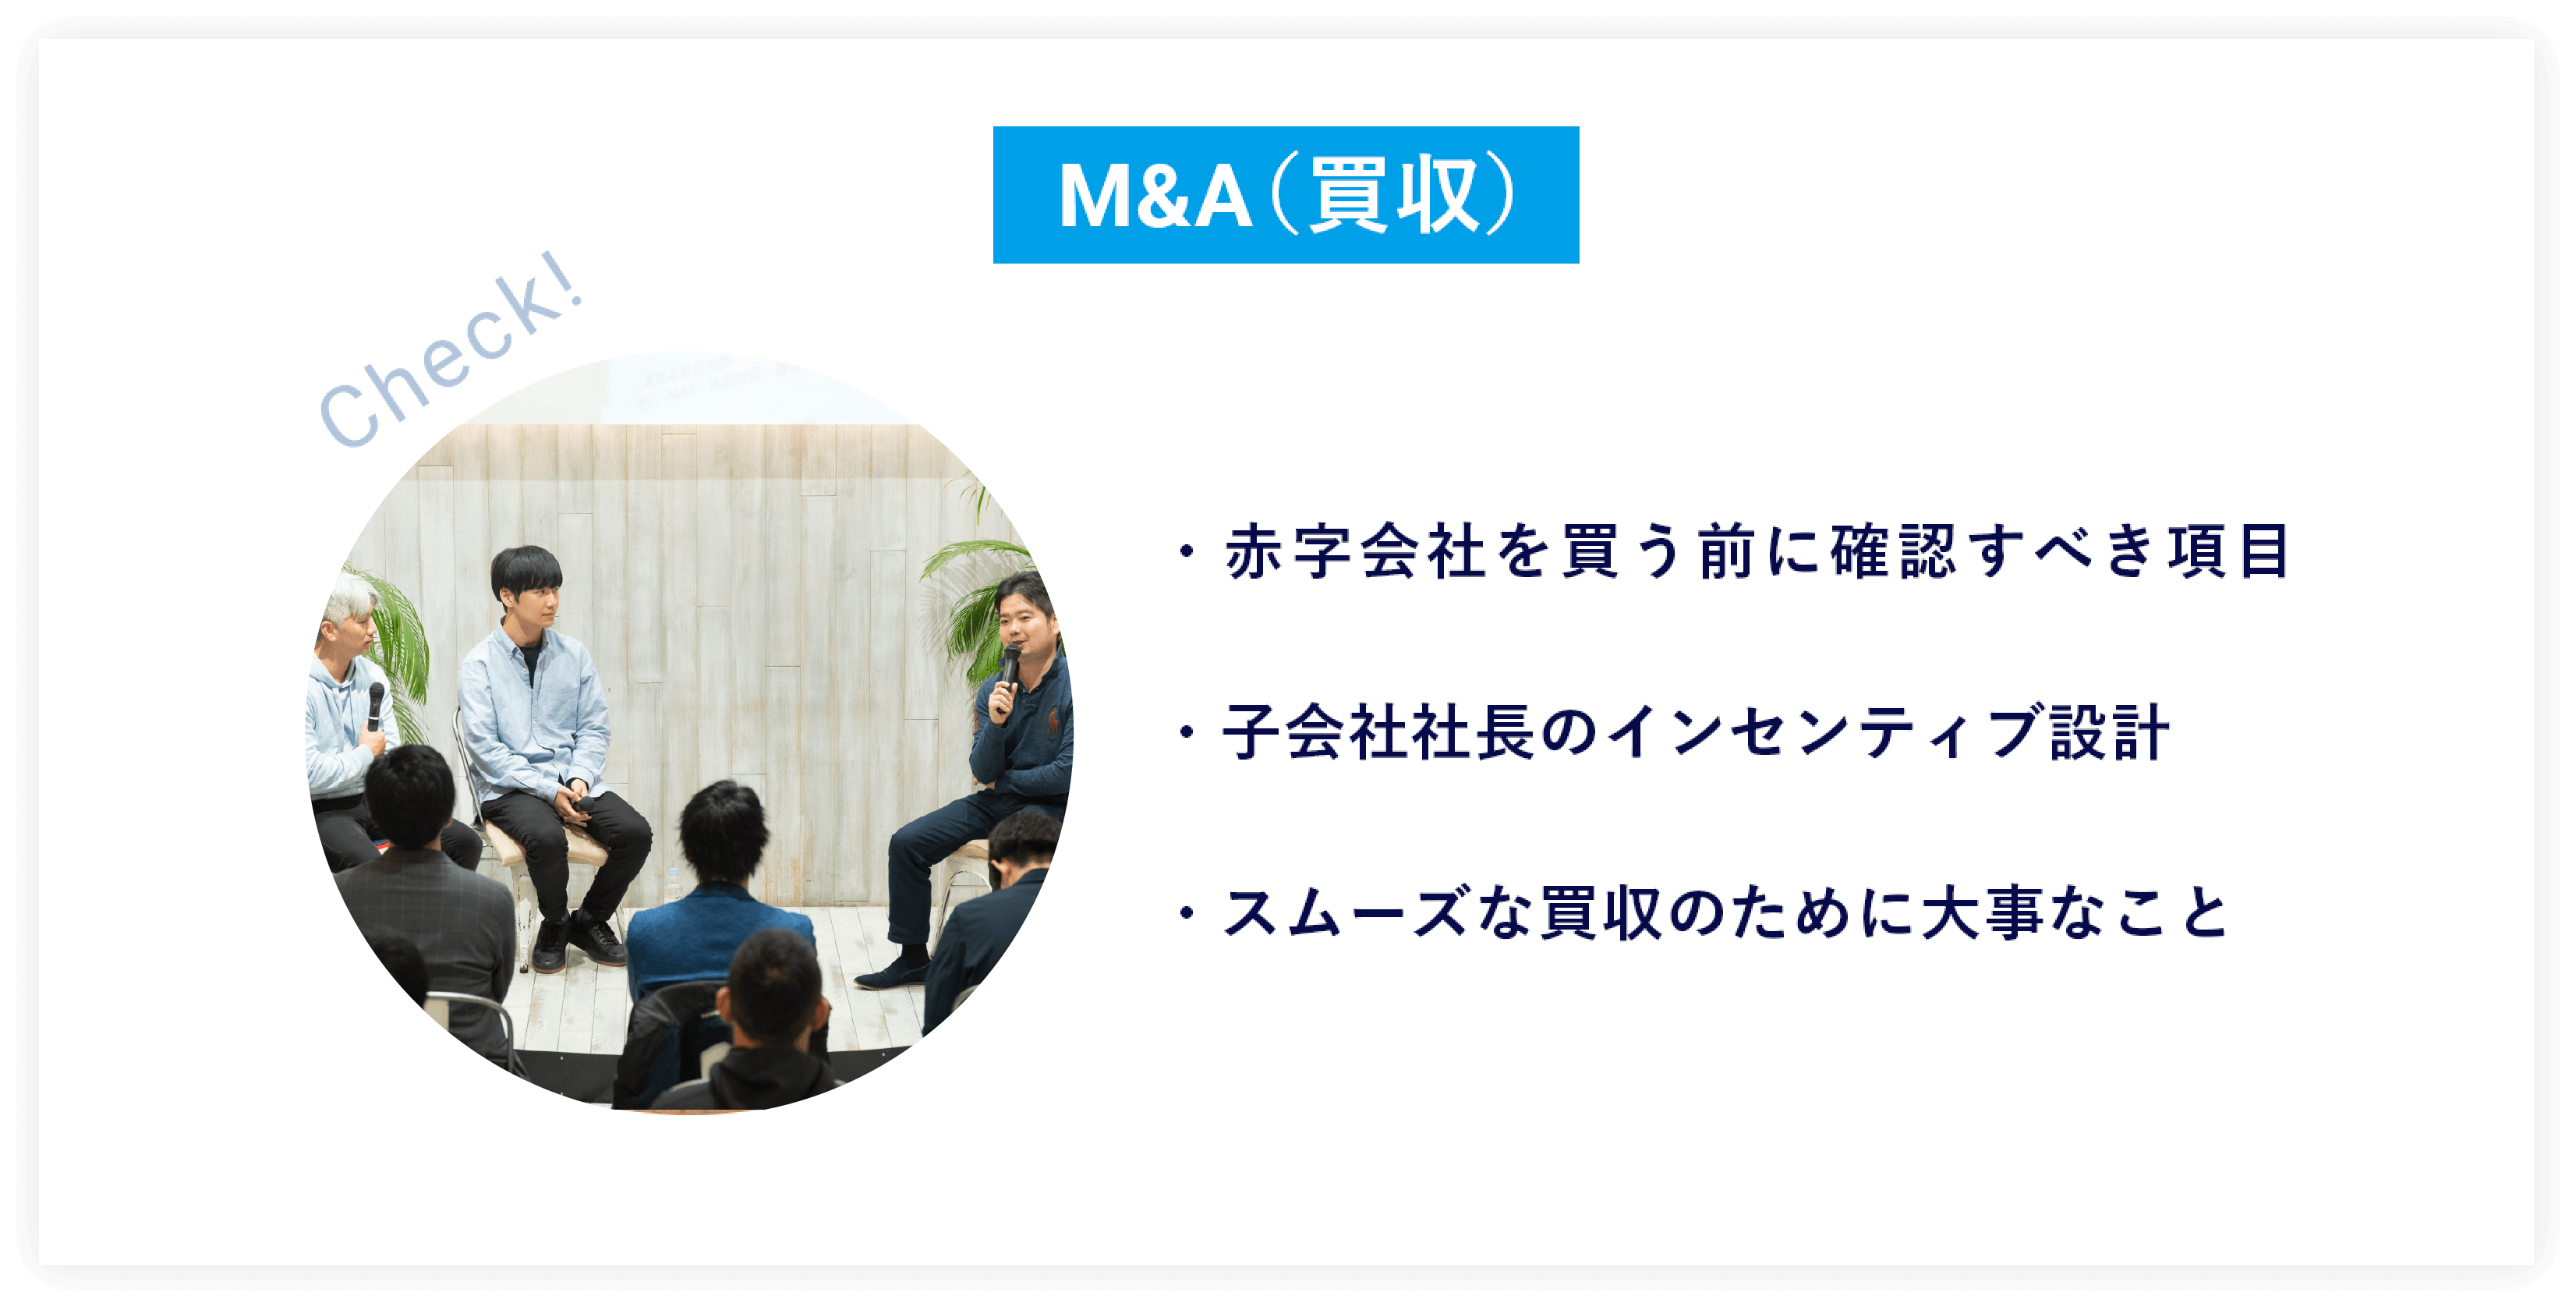 M&A（買収）